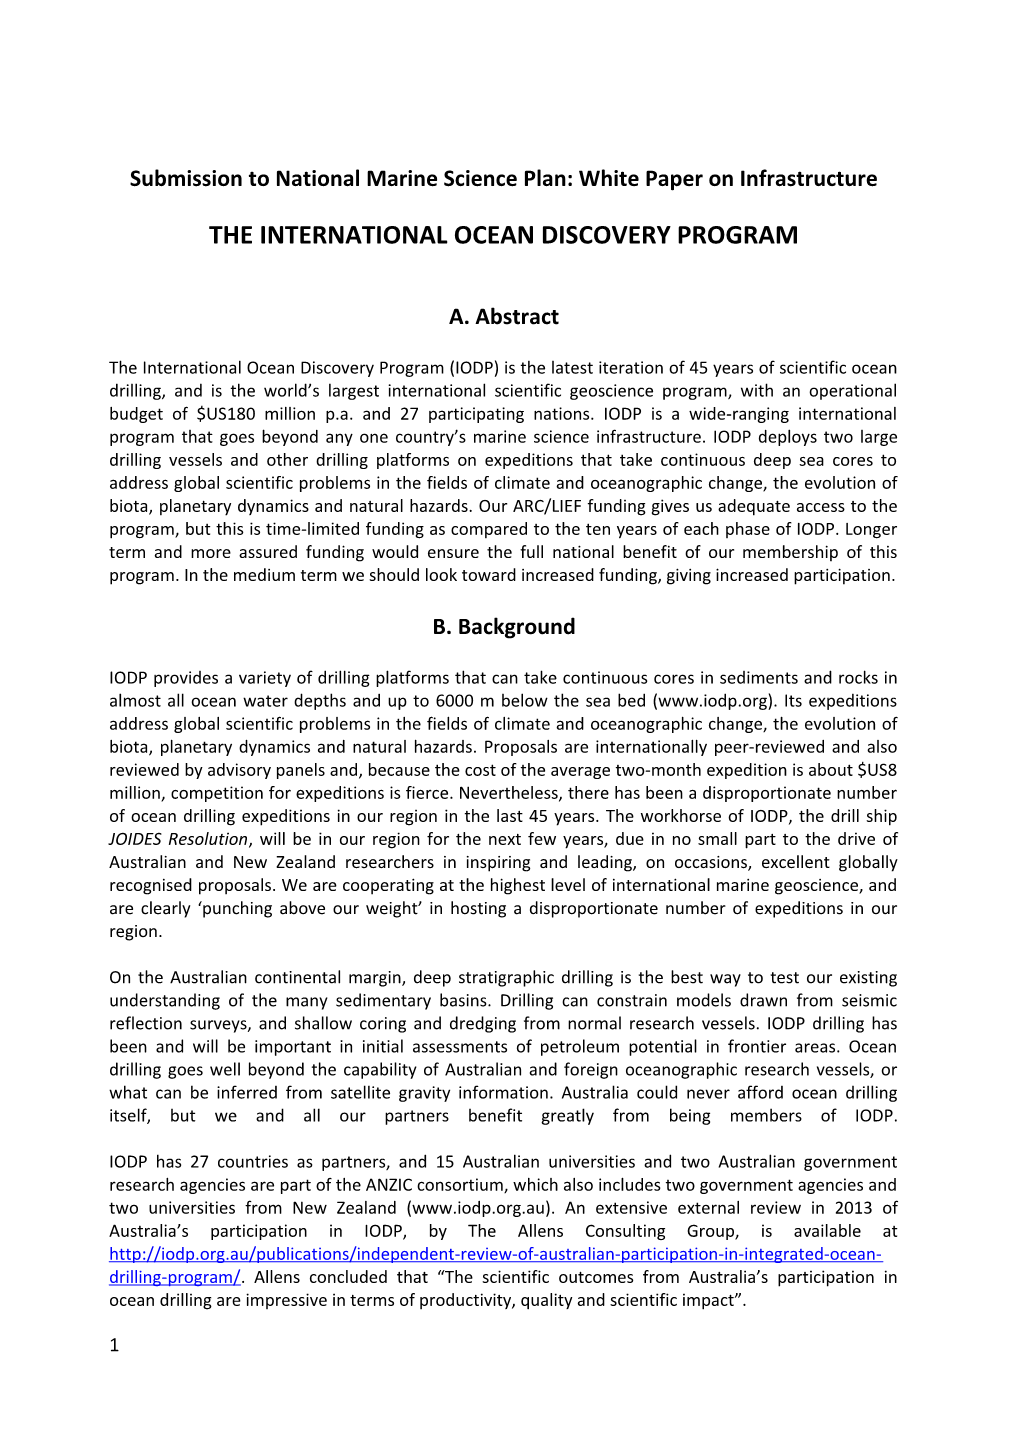 The International Ocean Discovery Program